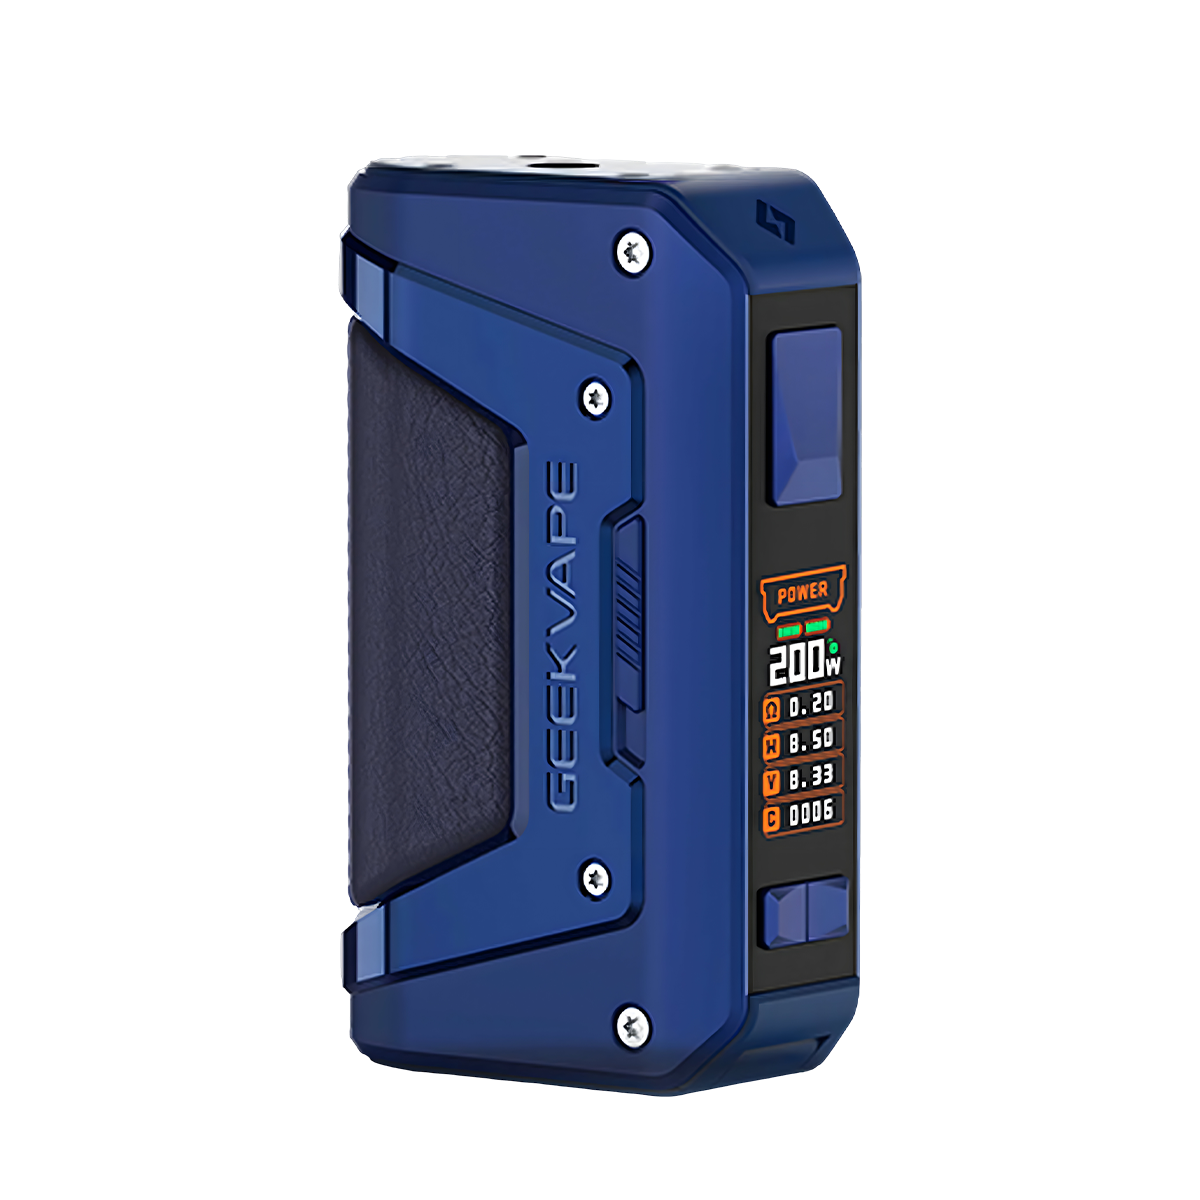 Geekvape L200 (Aegis Legend 2) Box-Mod Kit Navy Blue  